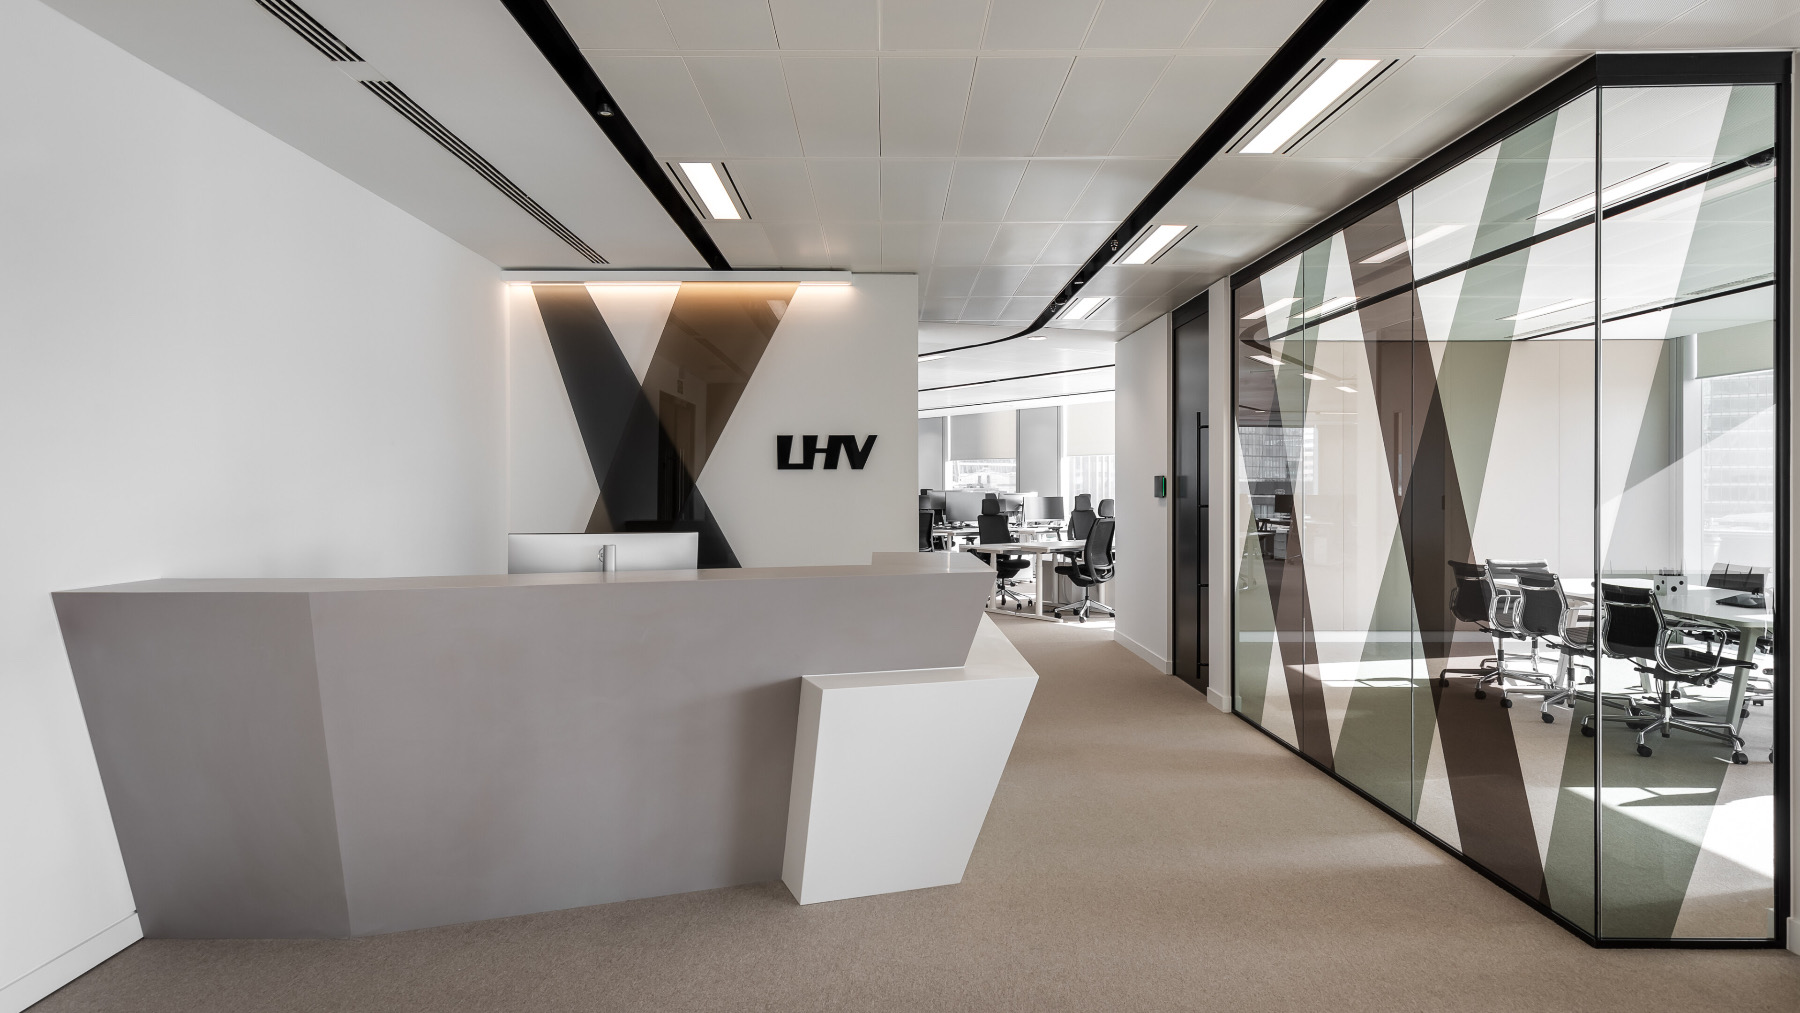 A Look Inside LHV Bank’s New London Office